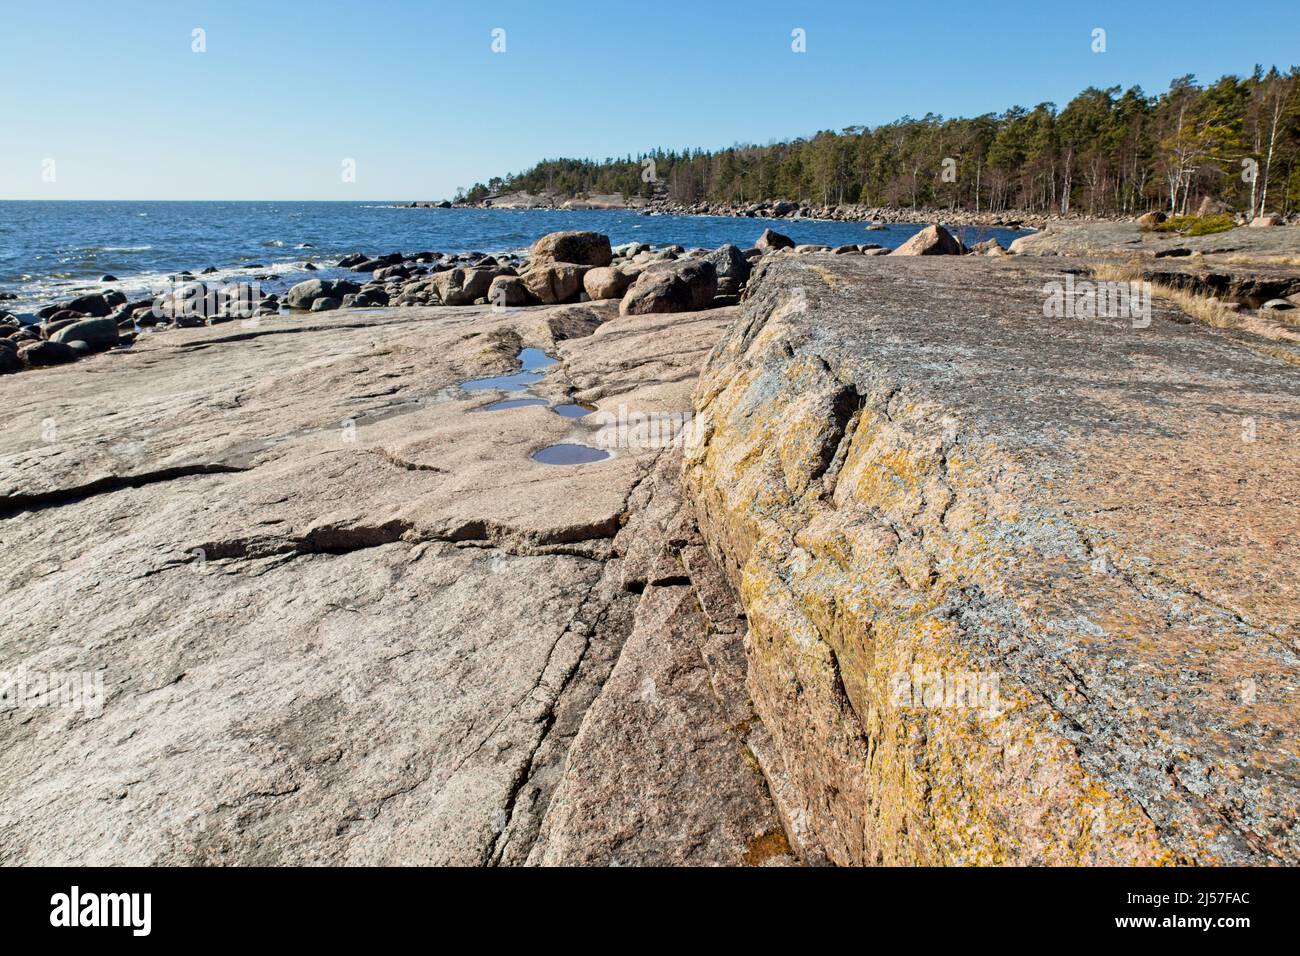 View of rocky seashore at Varlaxudden recreation area, Finland. Stock Photo